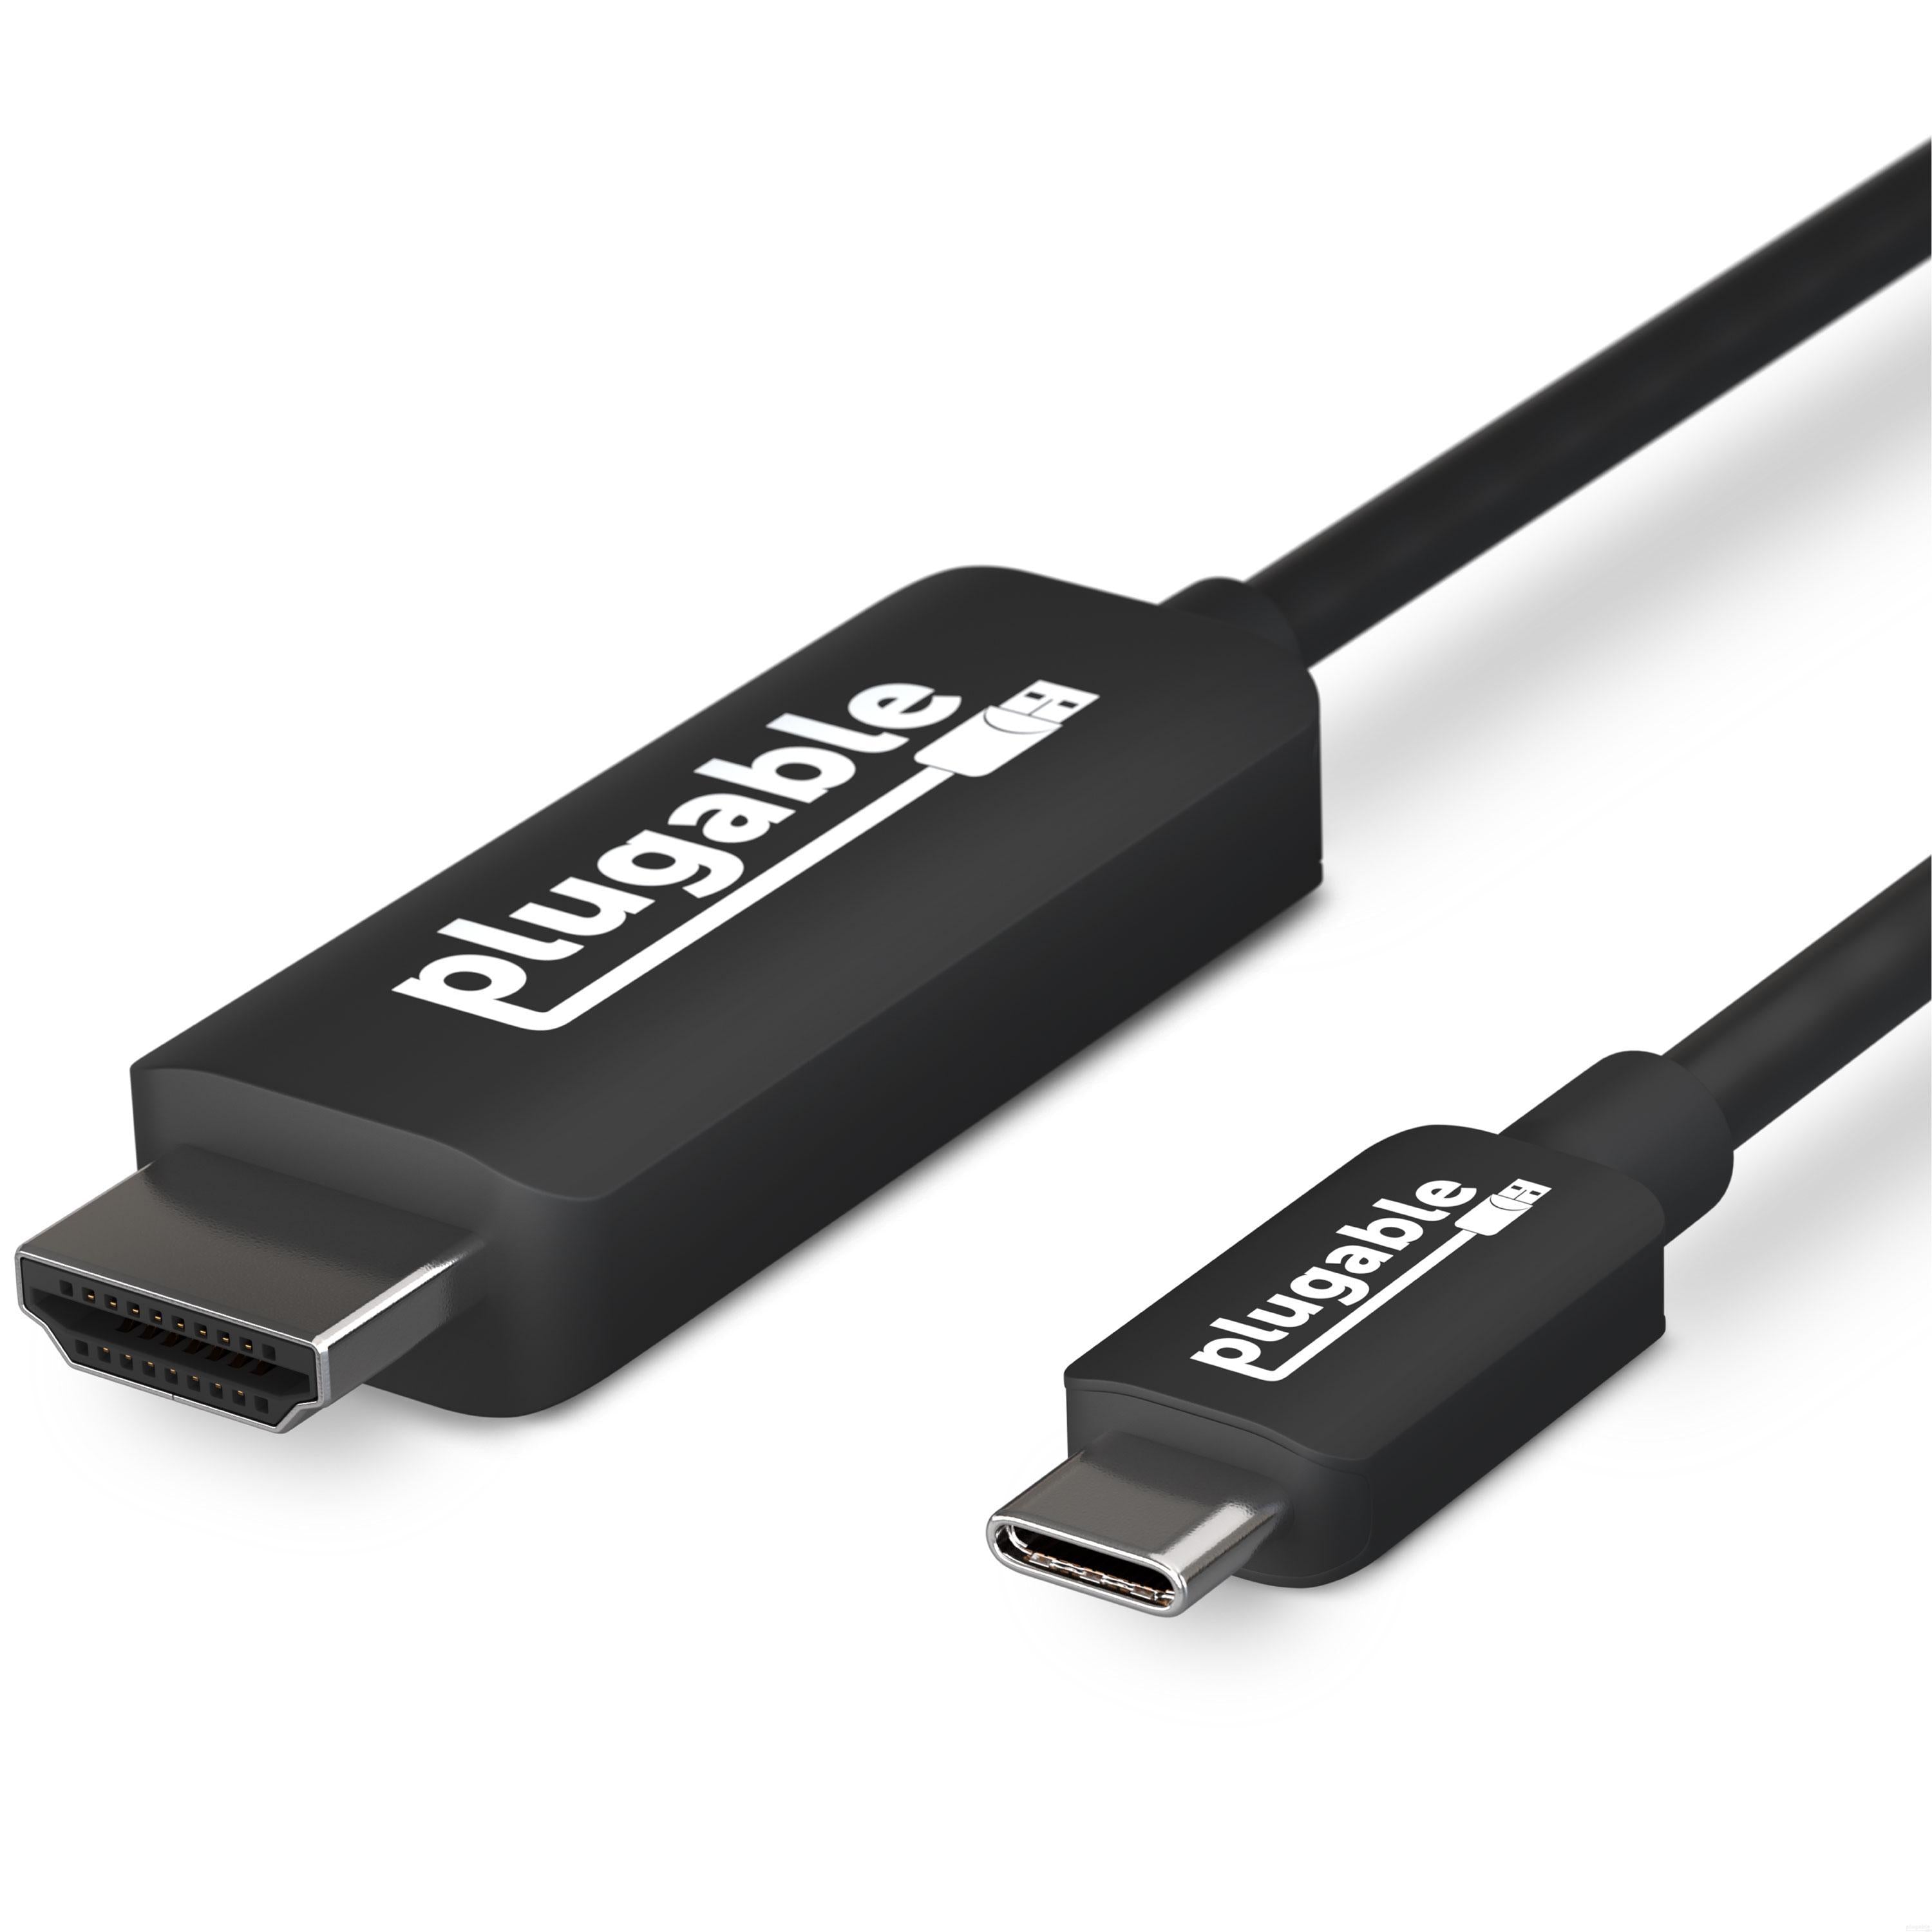 Plugable USB 3.1 2.0 Cable – Technologies